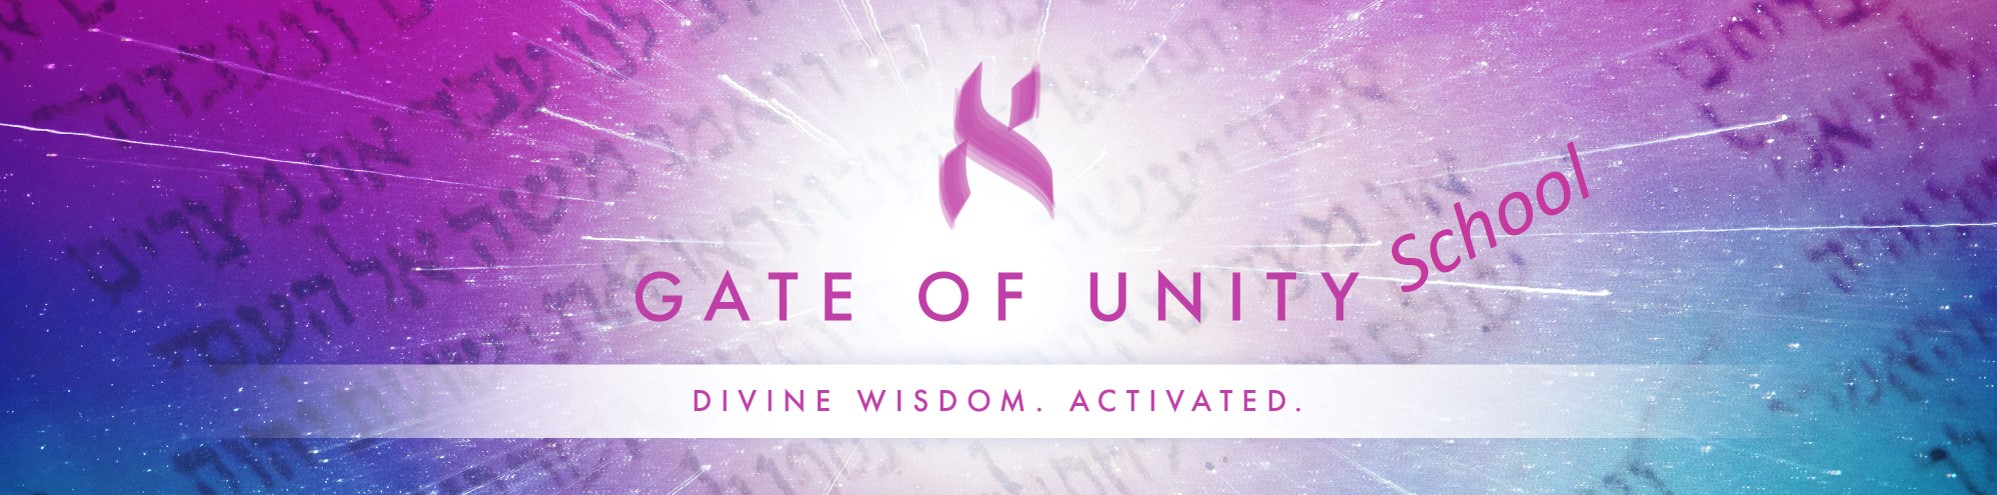 Gate of Unity School of Spiritual Empowerment